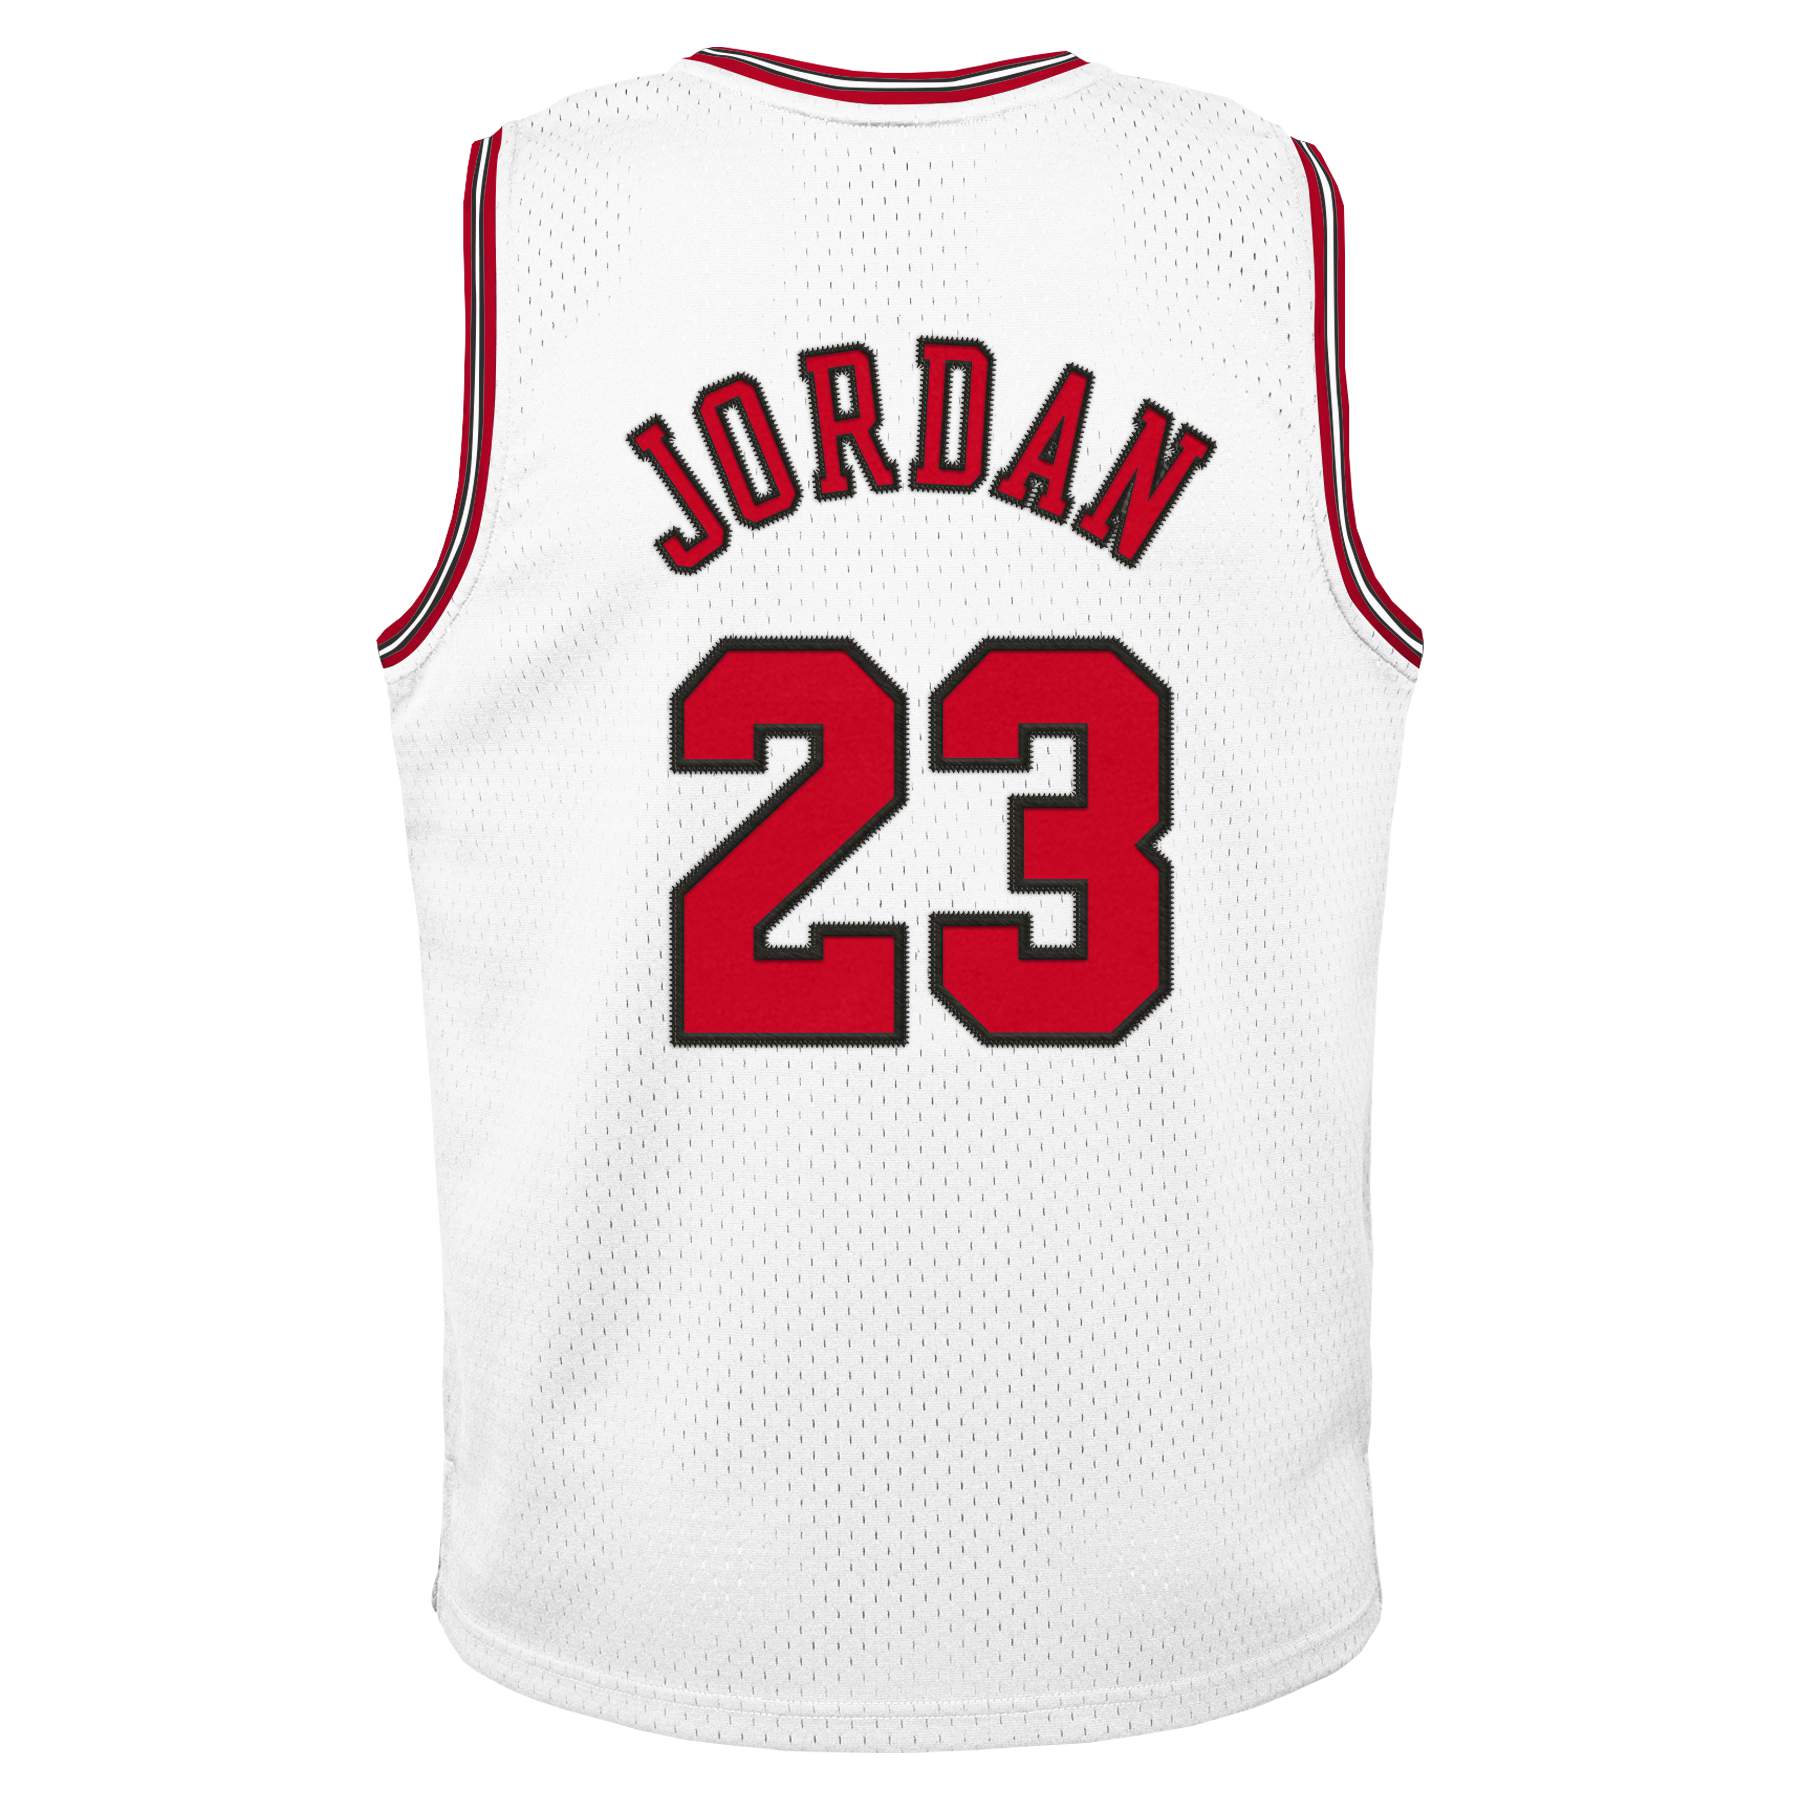 Authentic Jersey Jordan 3 Chicago Bulls EN2B7BMJ2-BULMJ